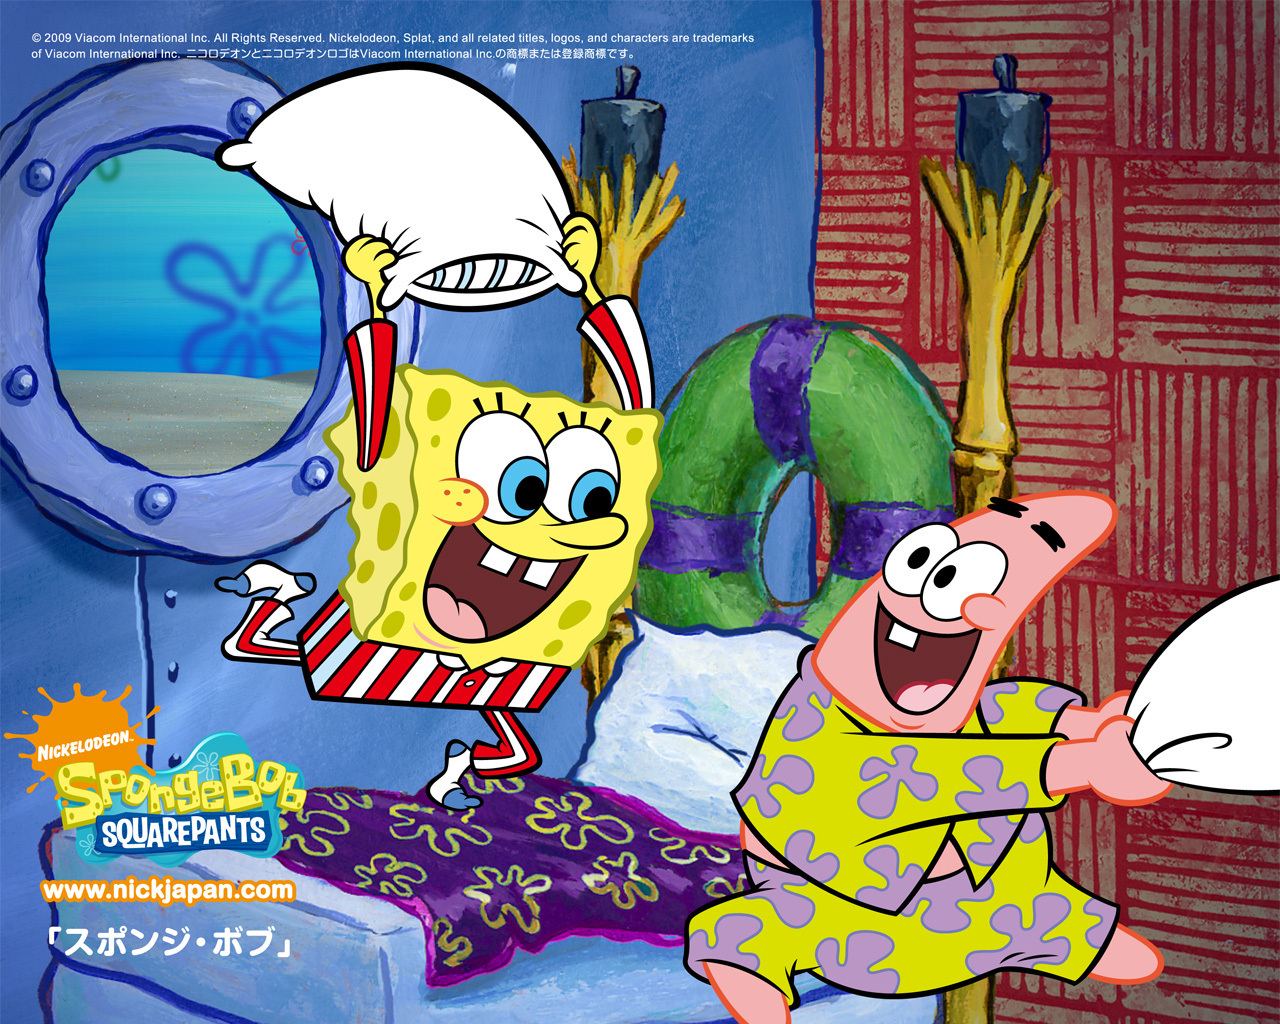 Spongebob Squarepants Image Pillow Fight HD Wallpaper And Background